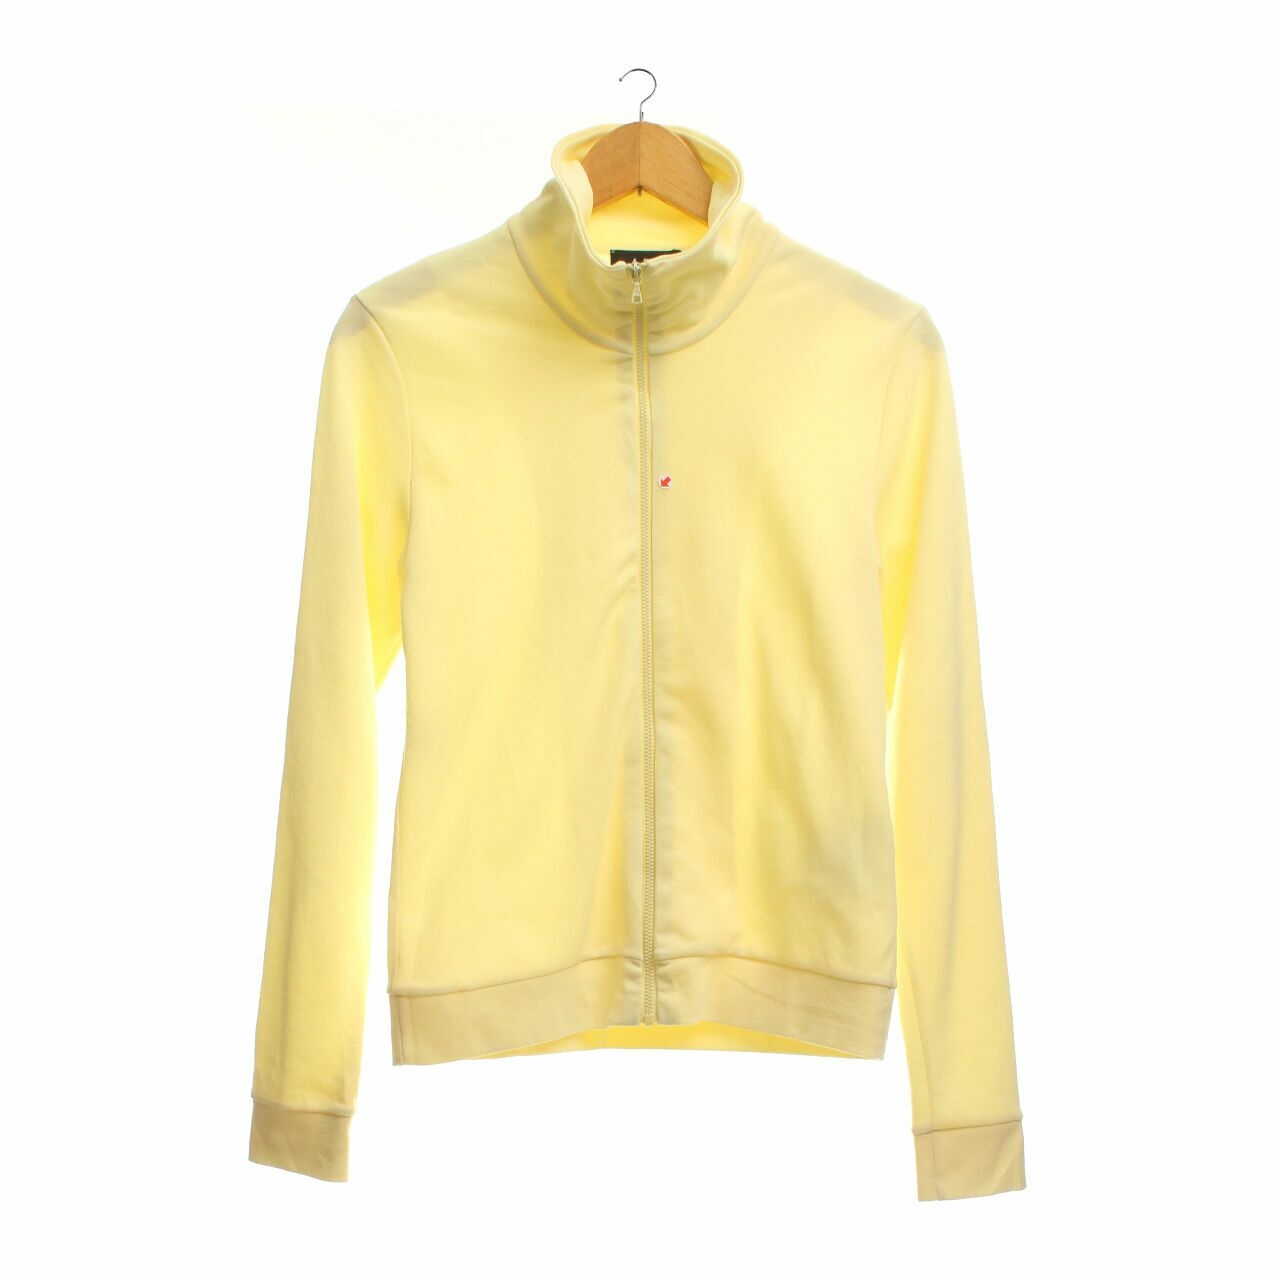 A.P.C Yellow Jacket